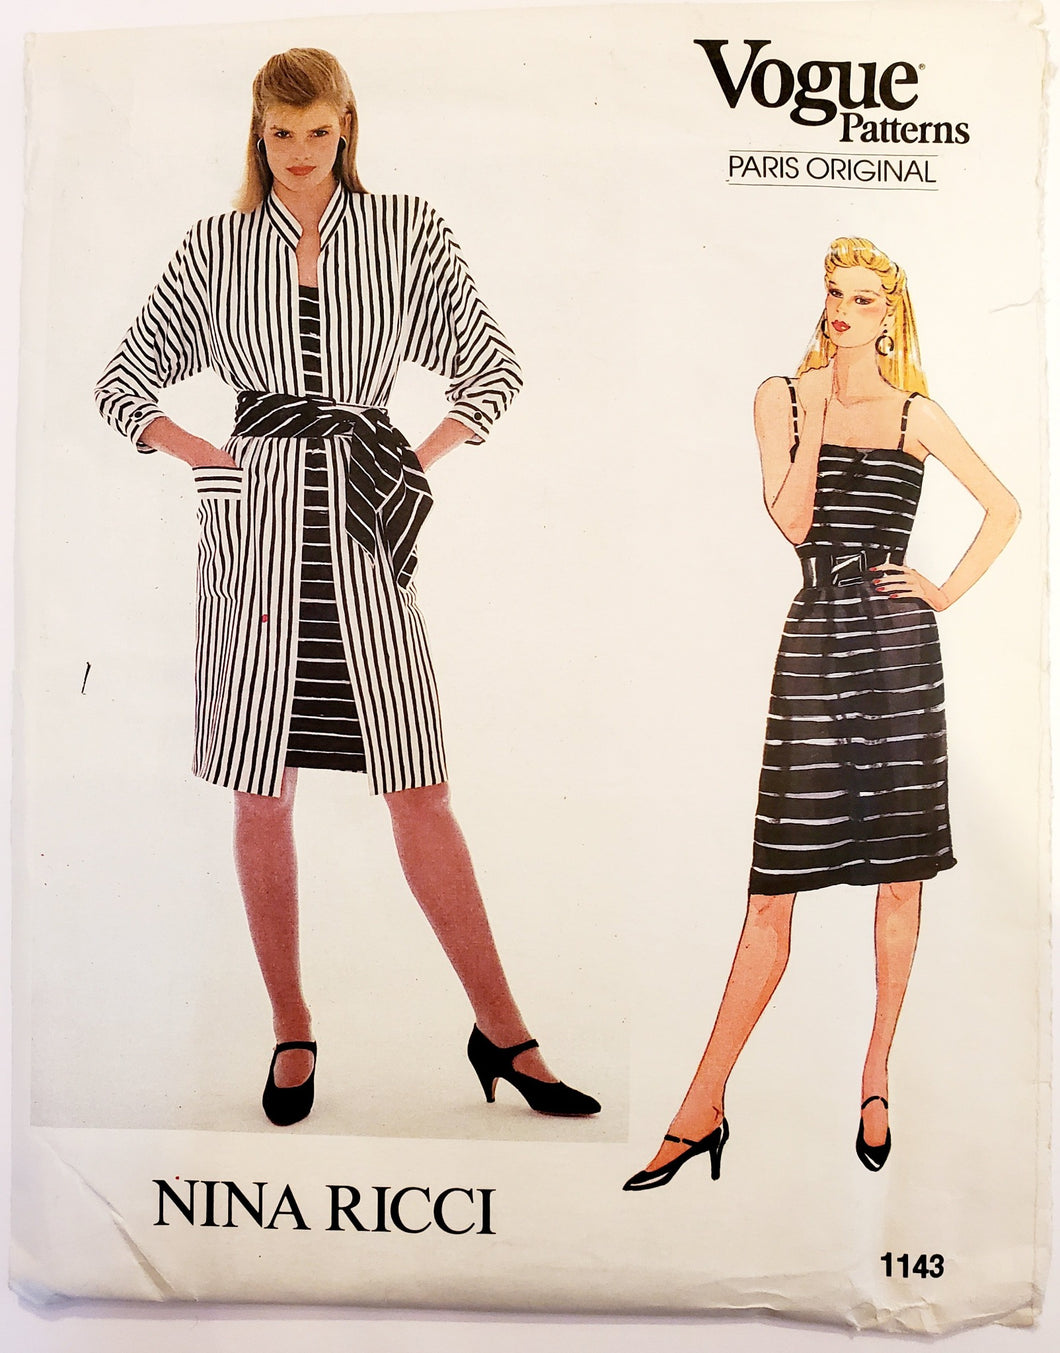 Vogue Pattern 1143, Paris Original Nina Ricci, Dress Size 10, Vintage and Very Rare